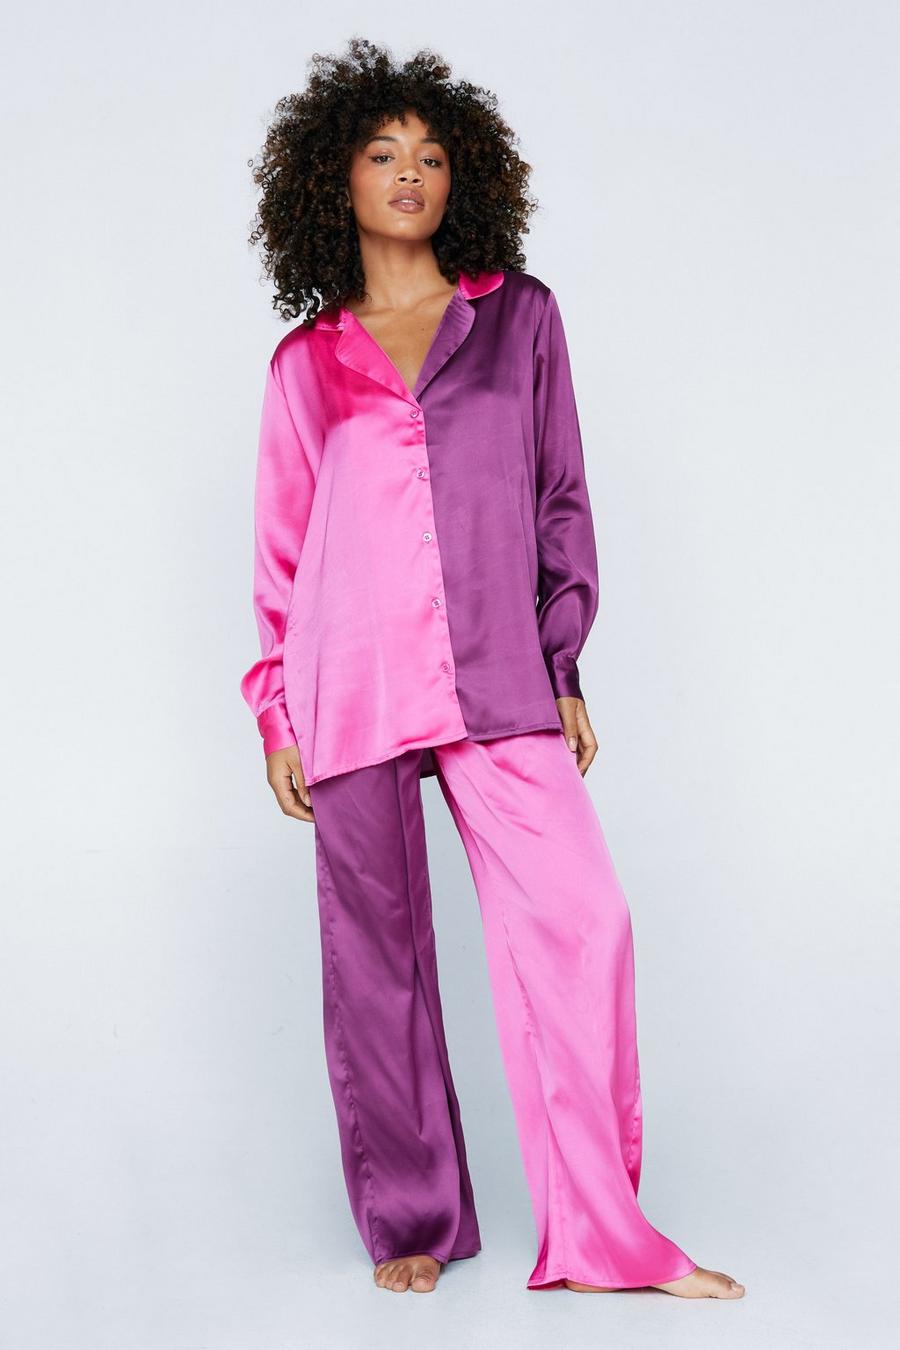 Silk Sleepwear Set for Women | Pajama Sets | Satin Dress | Nightwear Set |  Franshionable